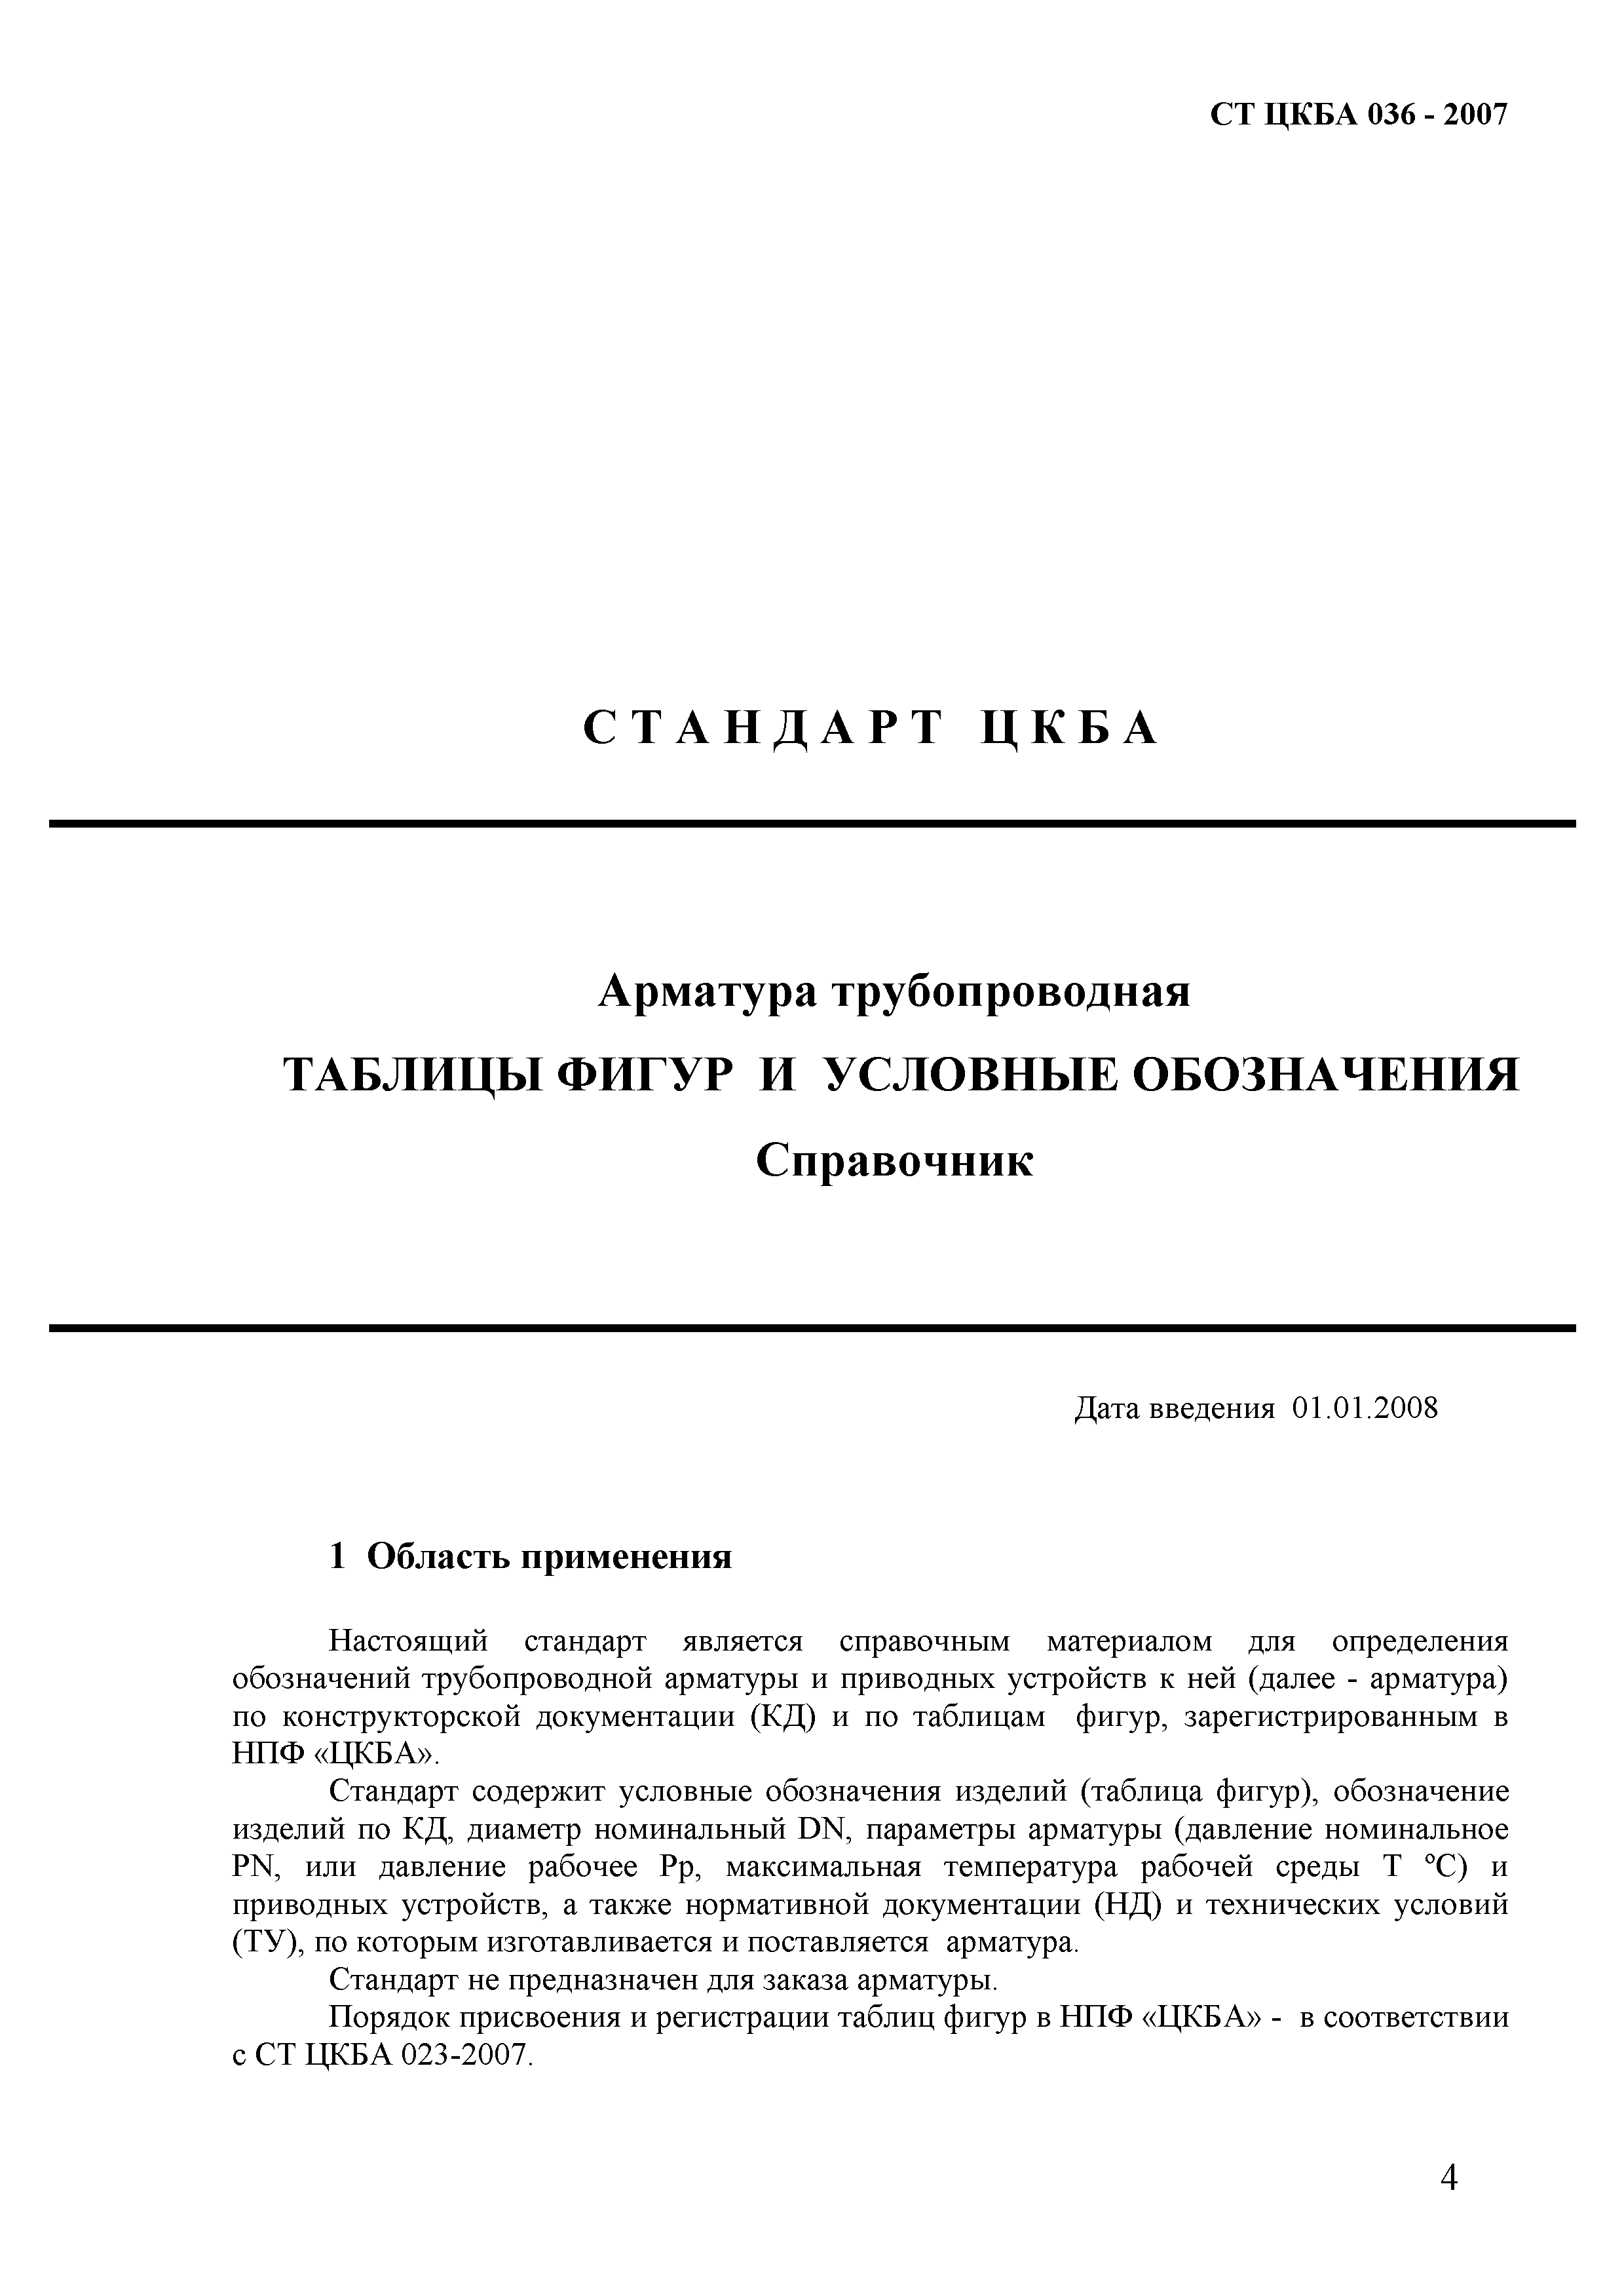 СТ ЦКБА 036-2007